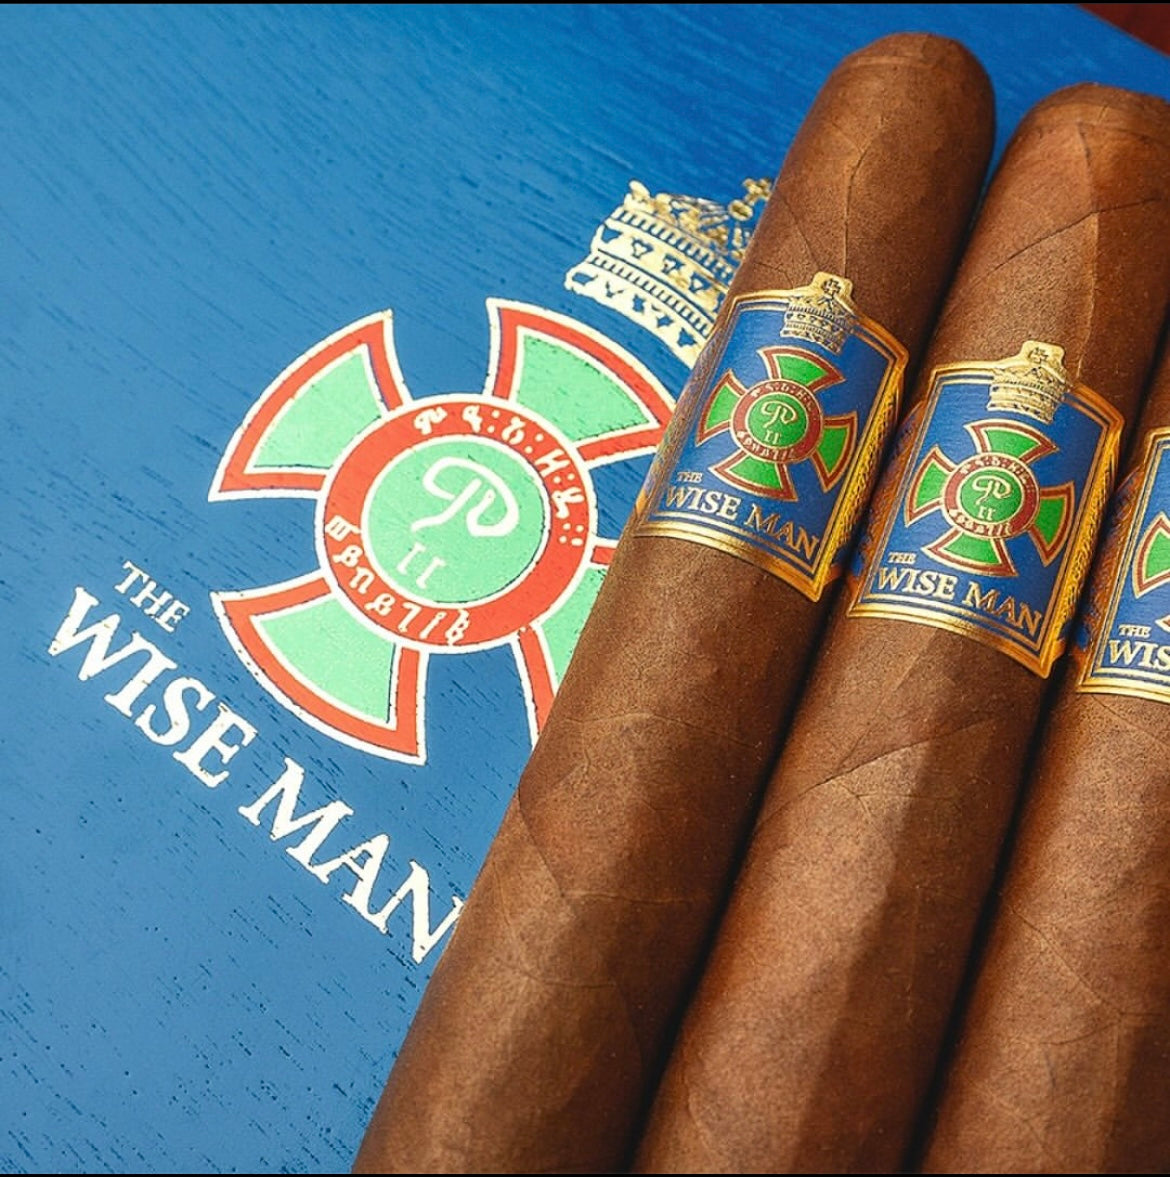 Foundation Cigars - The Wise Man Corojo Robusto